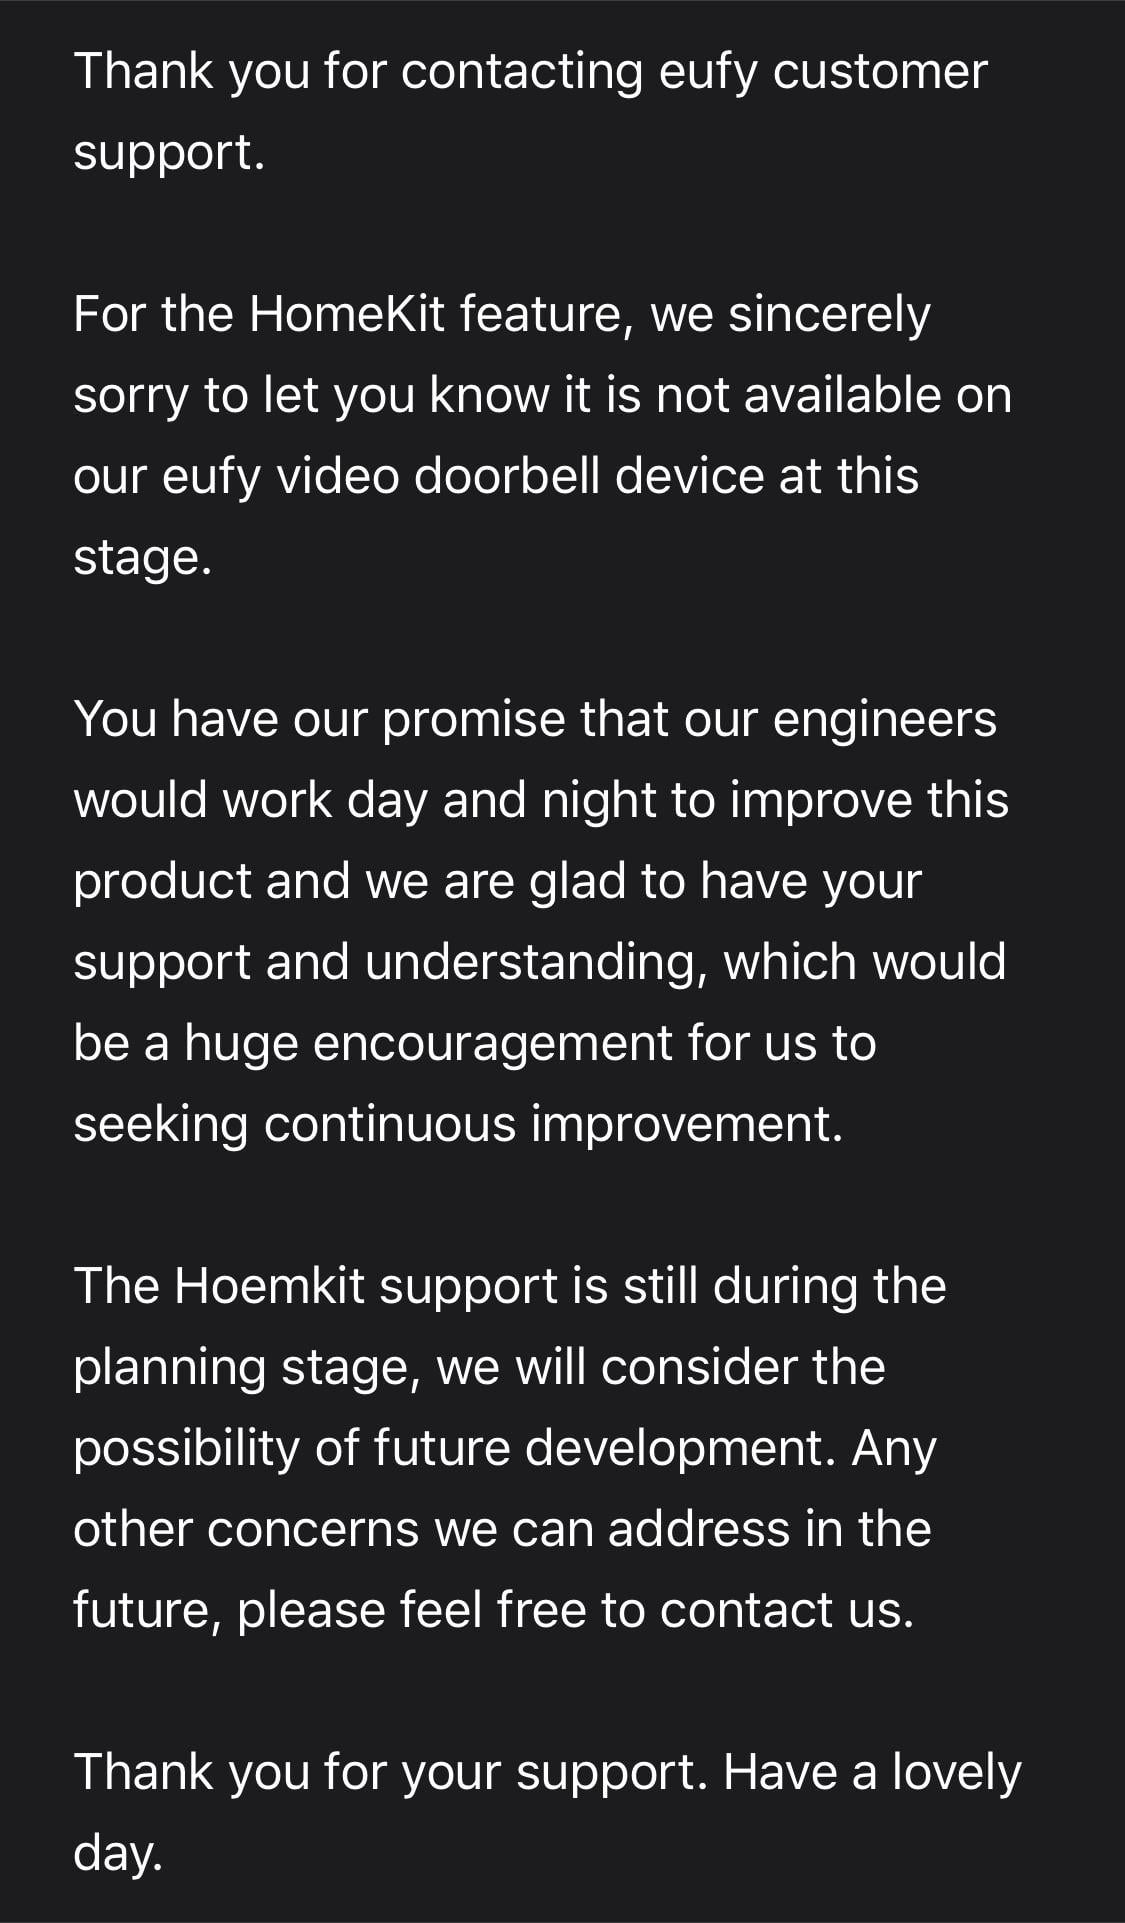 HomeKit on Eufy Battery Doorbell will not be coming soon